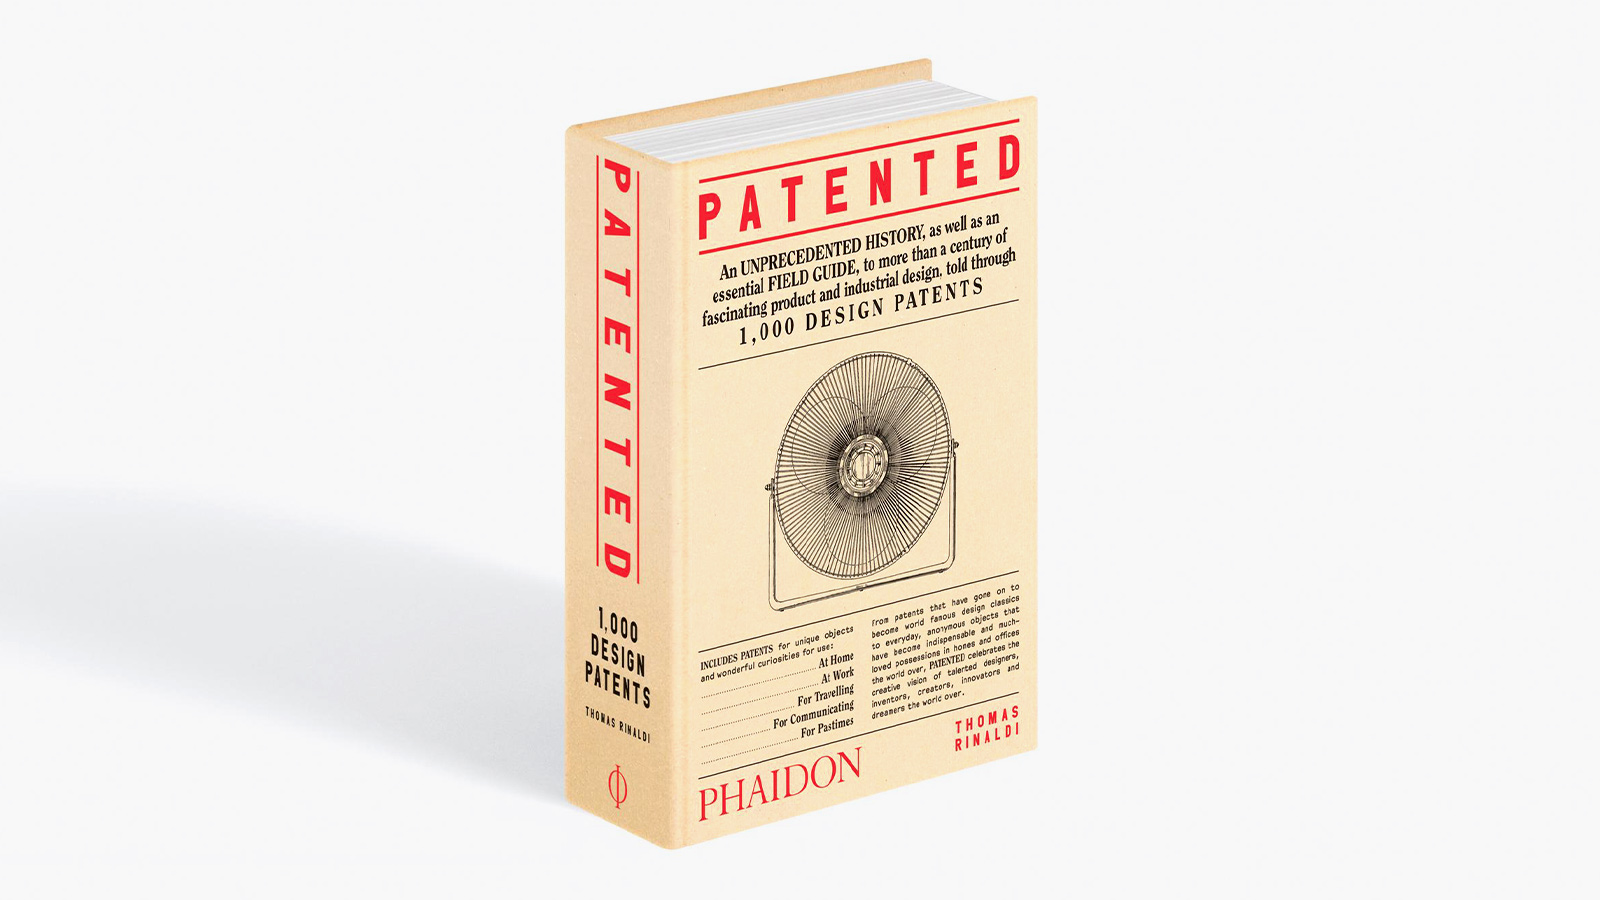 ‘Patented: 1,000 Design Patents’ by Thomas Rinaldi